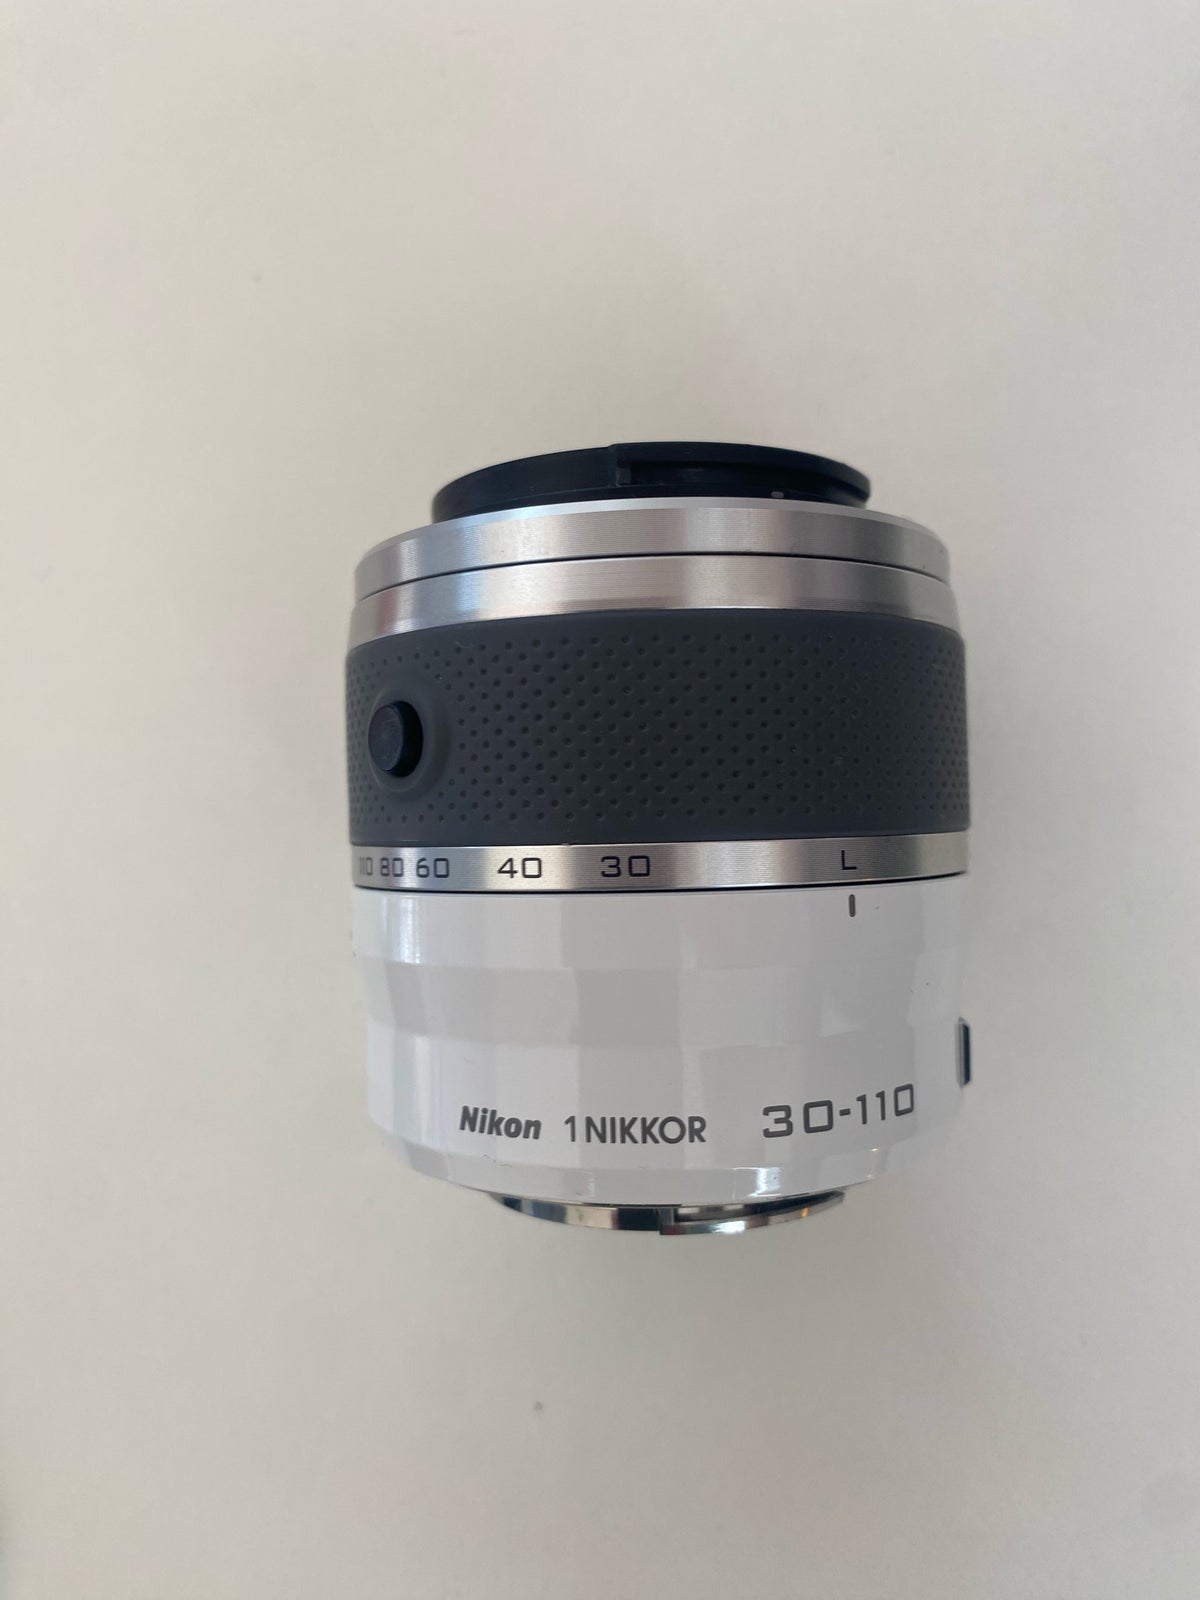 zoom 30-110 mm, Nikon, 1 Nikkor